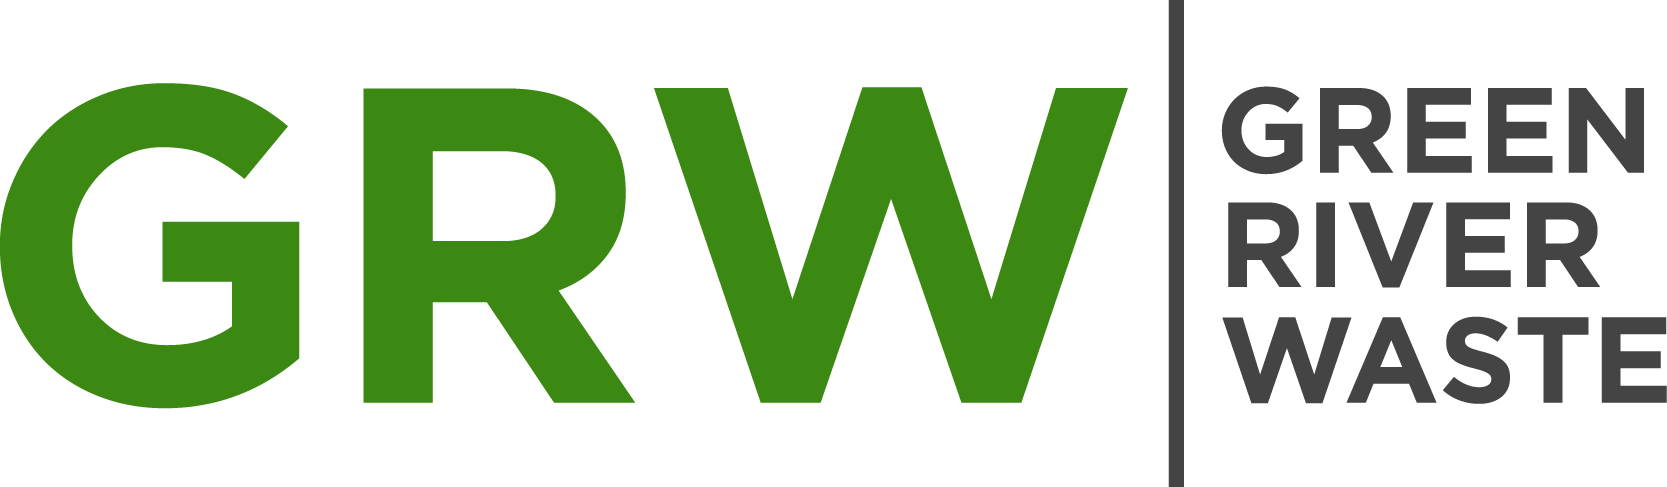 Green River Waste, Inc. Logo